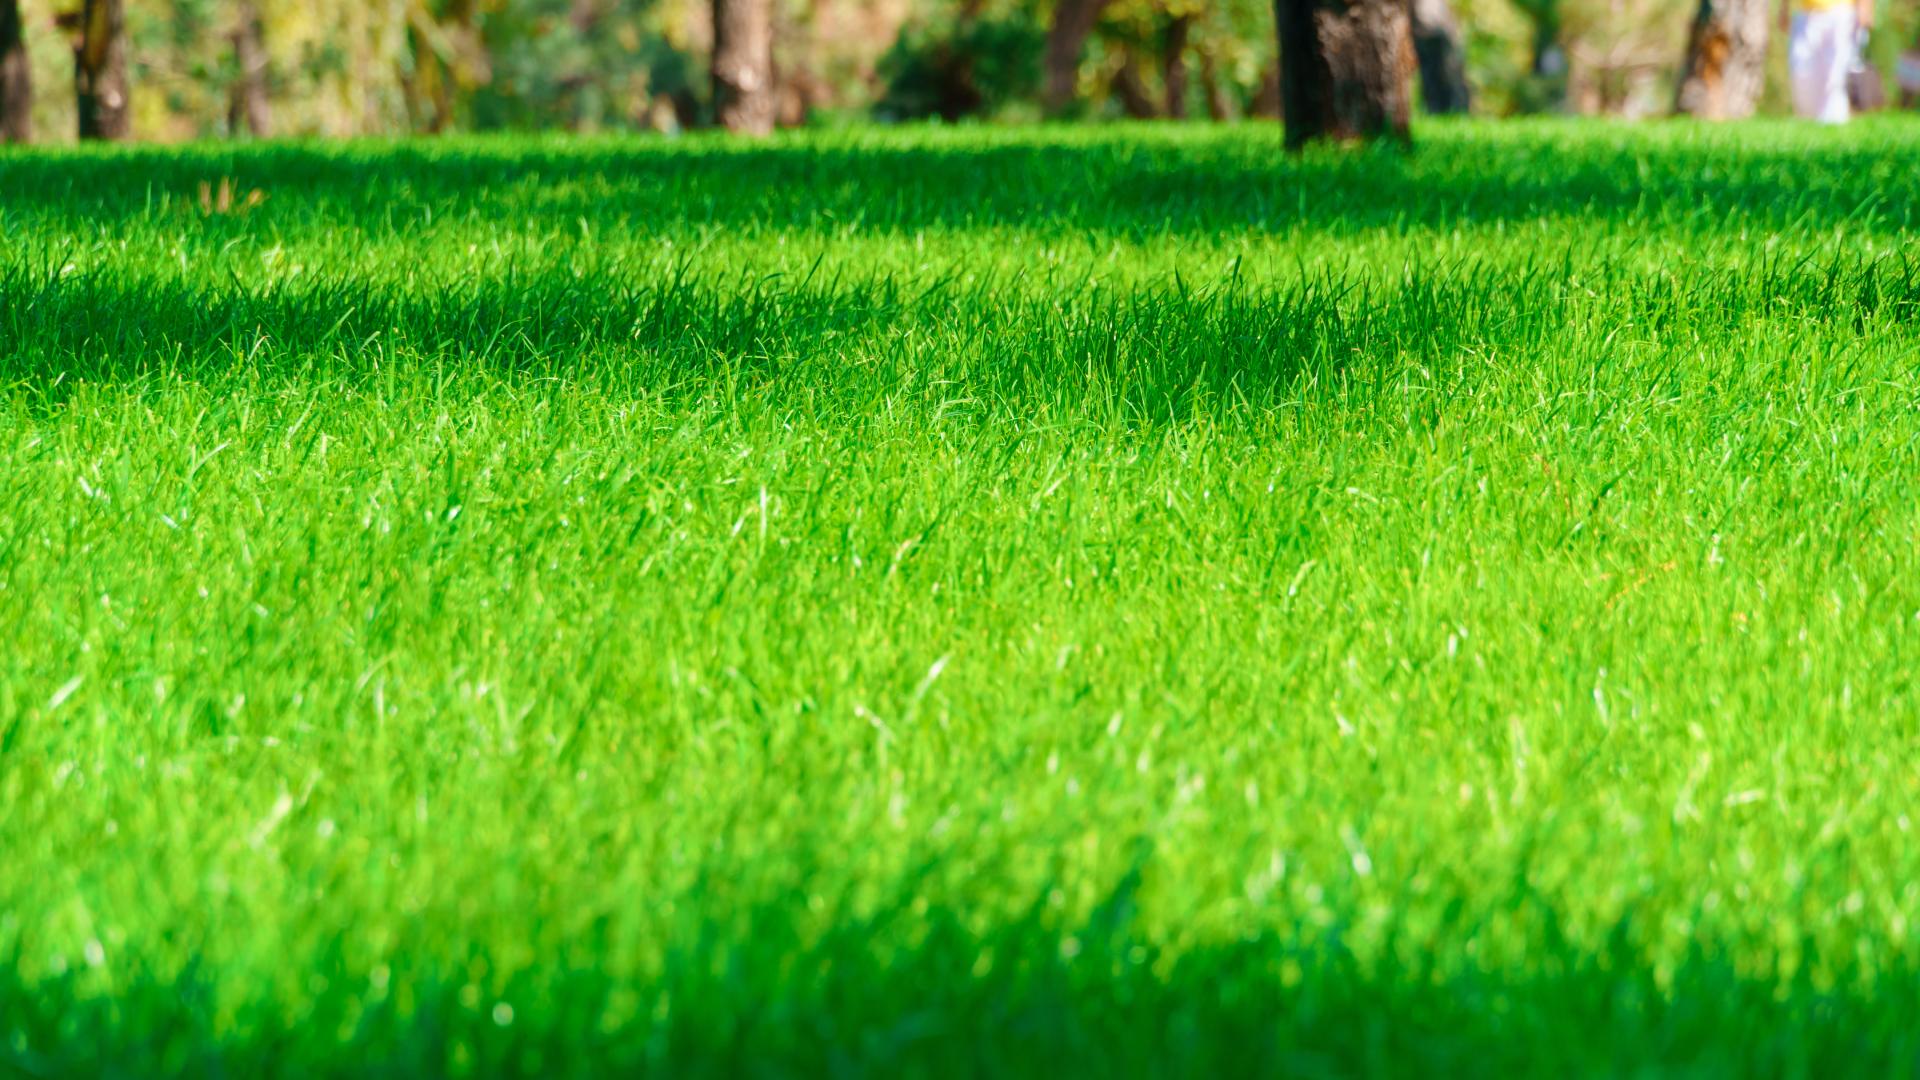 Luscious grass blades in lawn in Kansas City, KS.